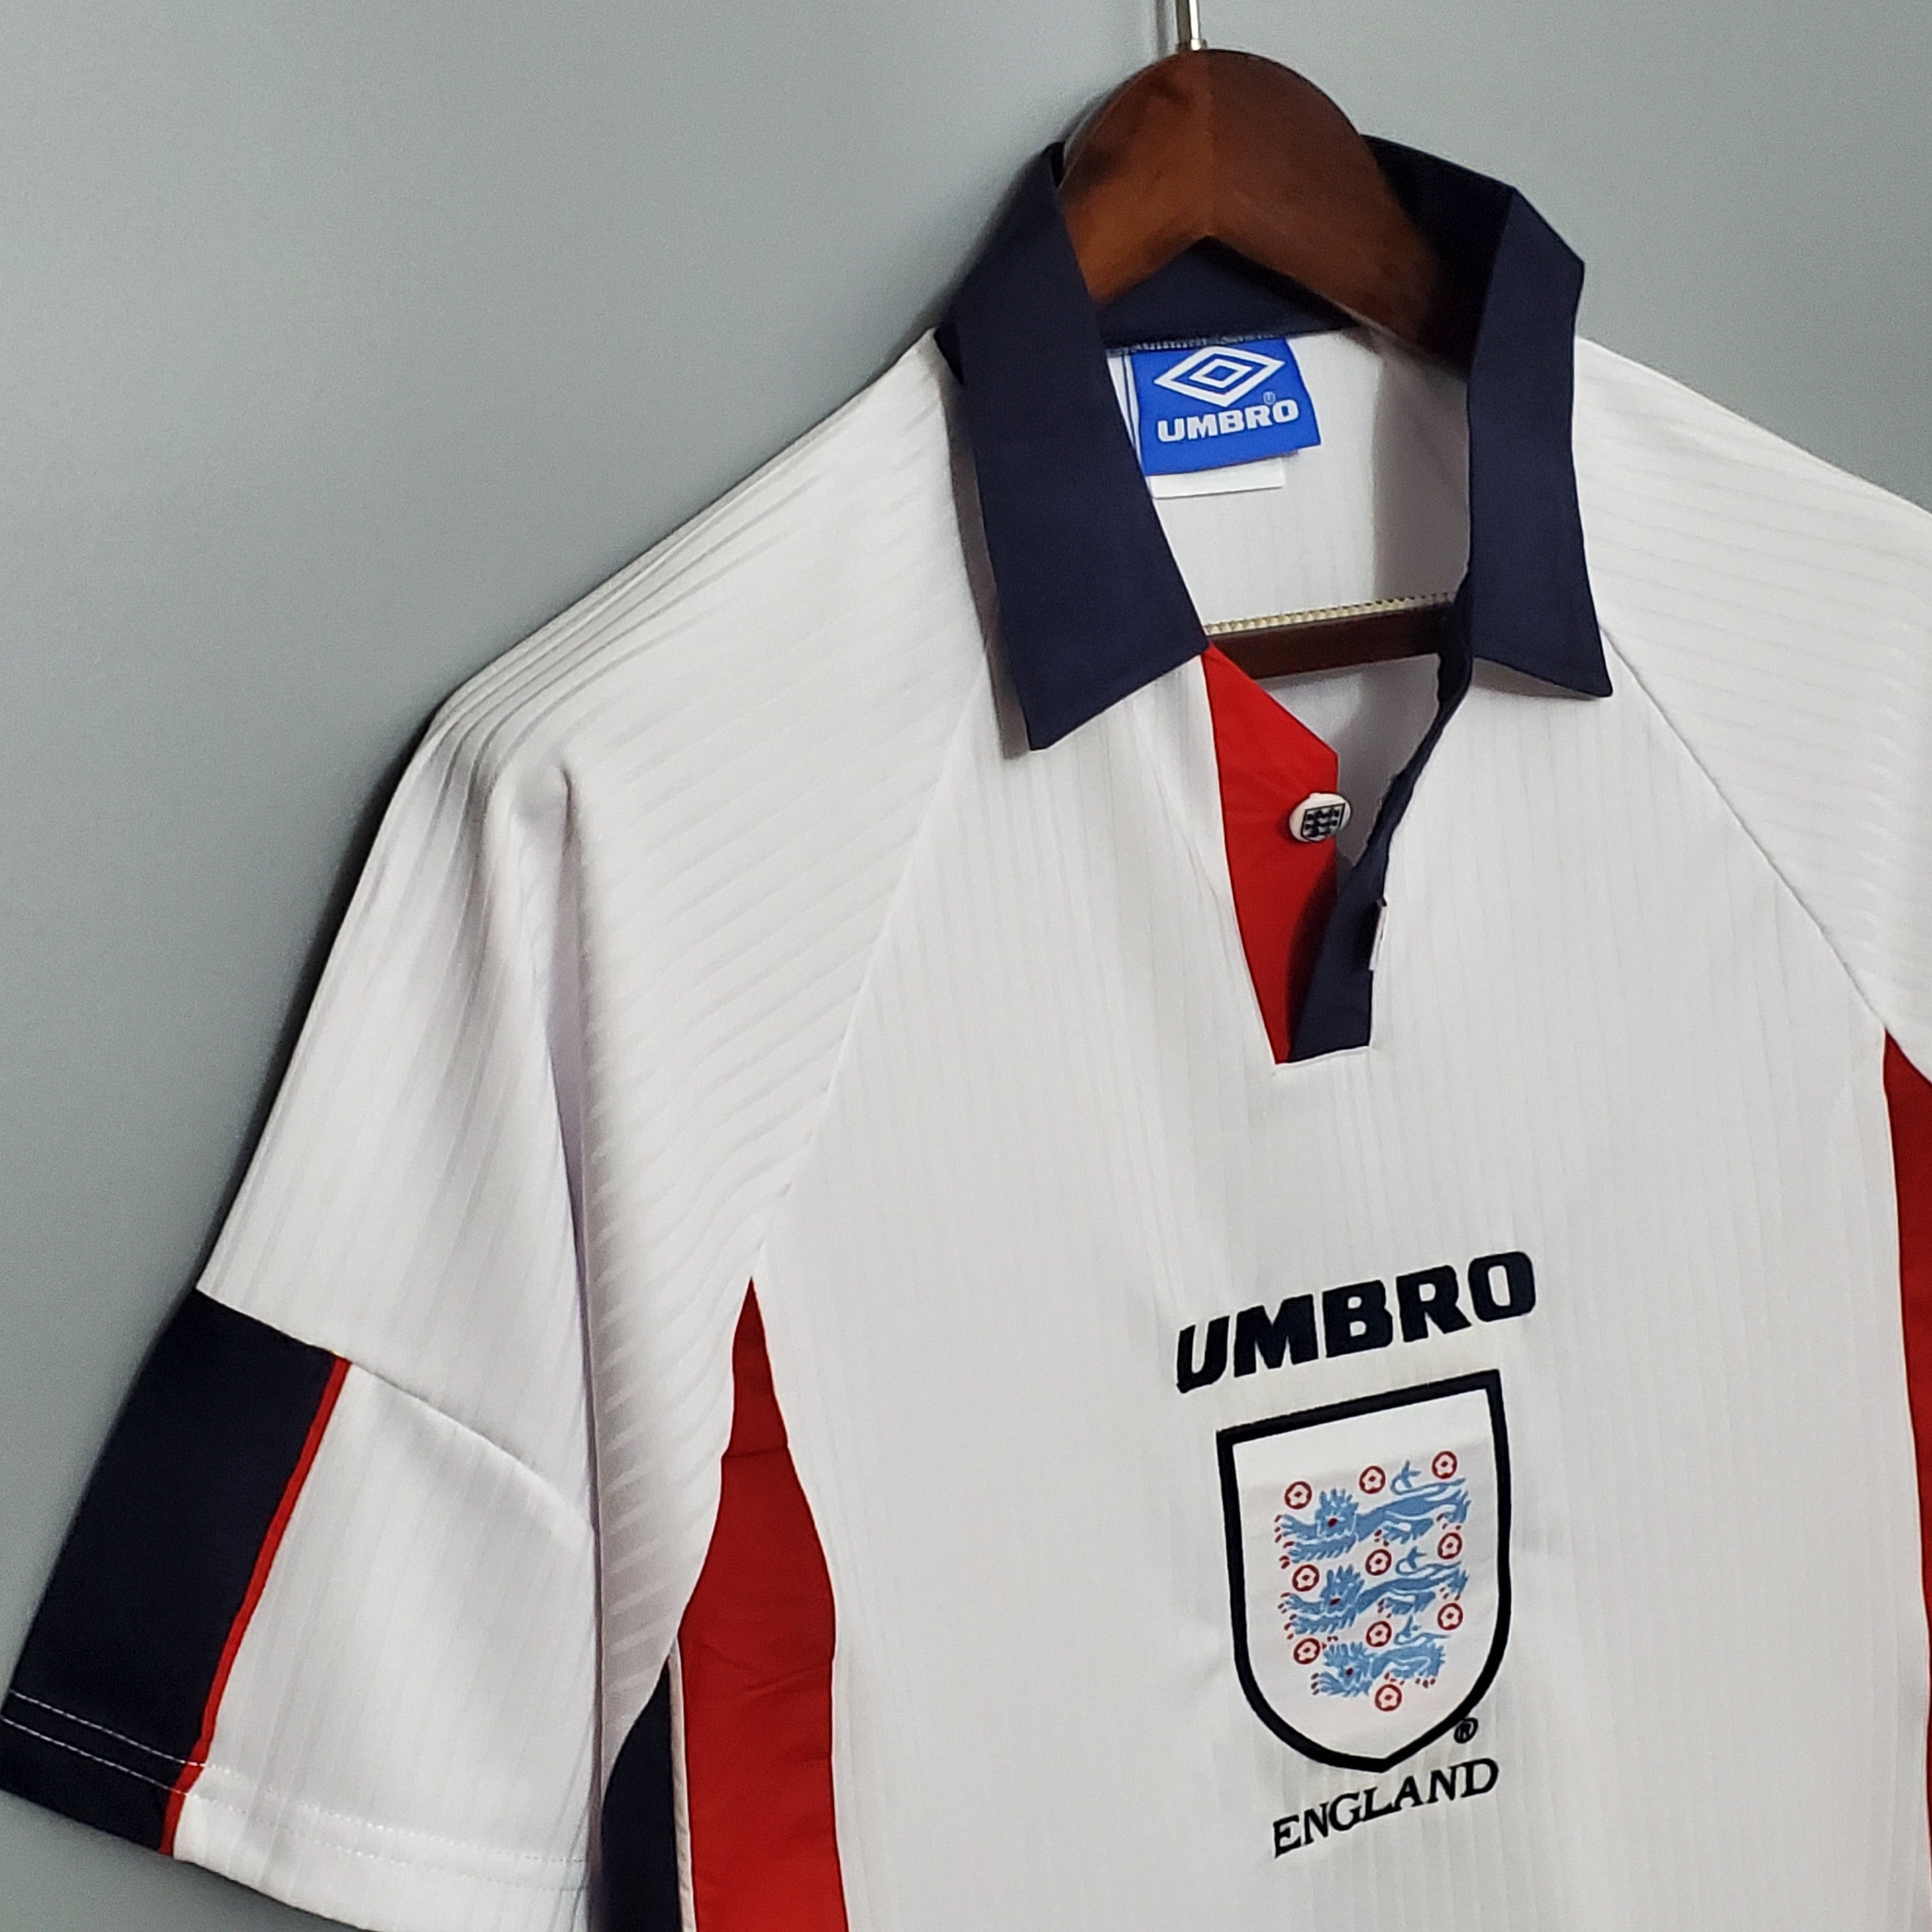 England 1998 World Cup Retro Jersey